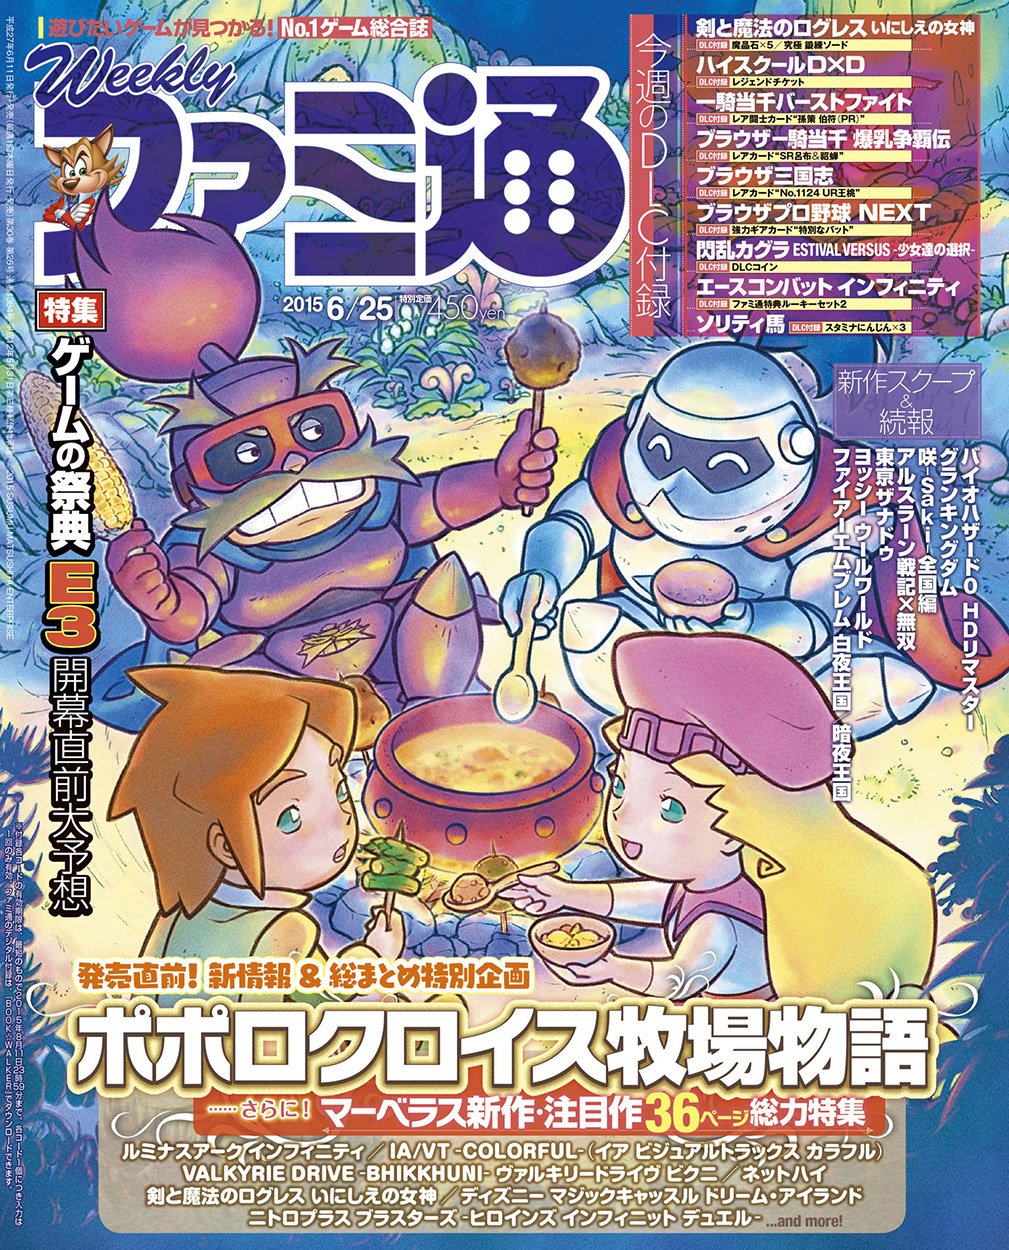 Famitsu Video Game Magazines Page 16 Retromags Community